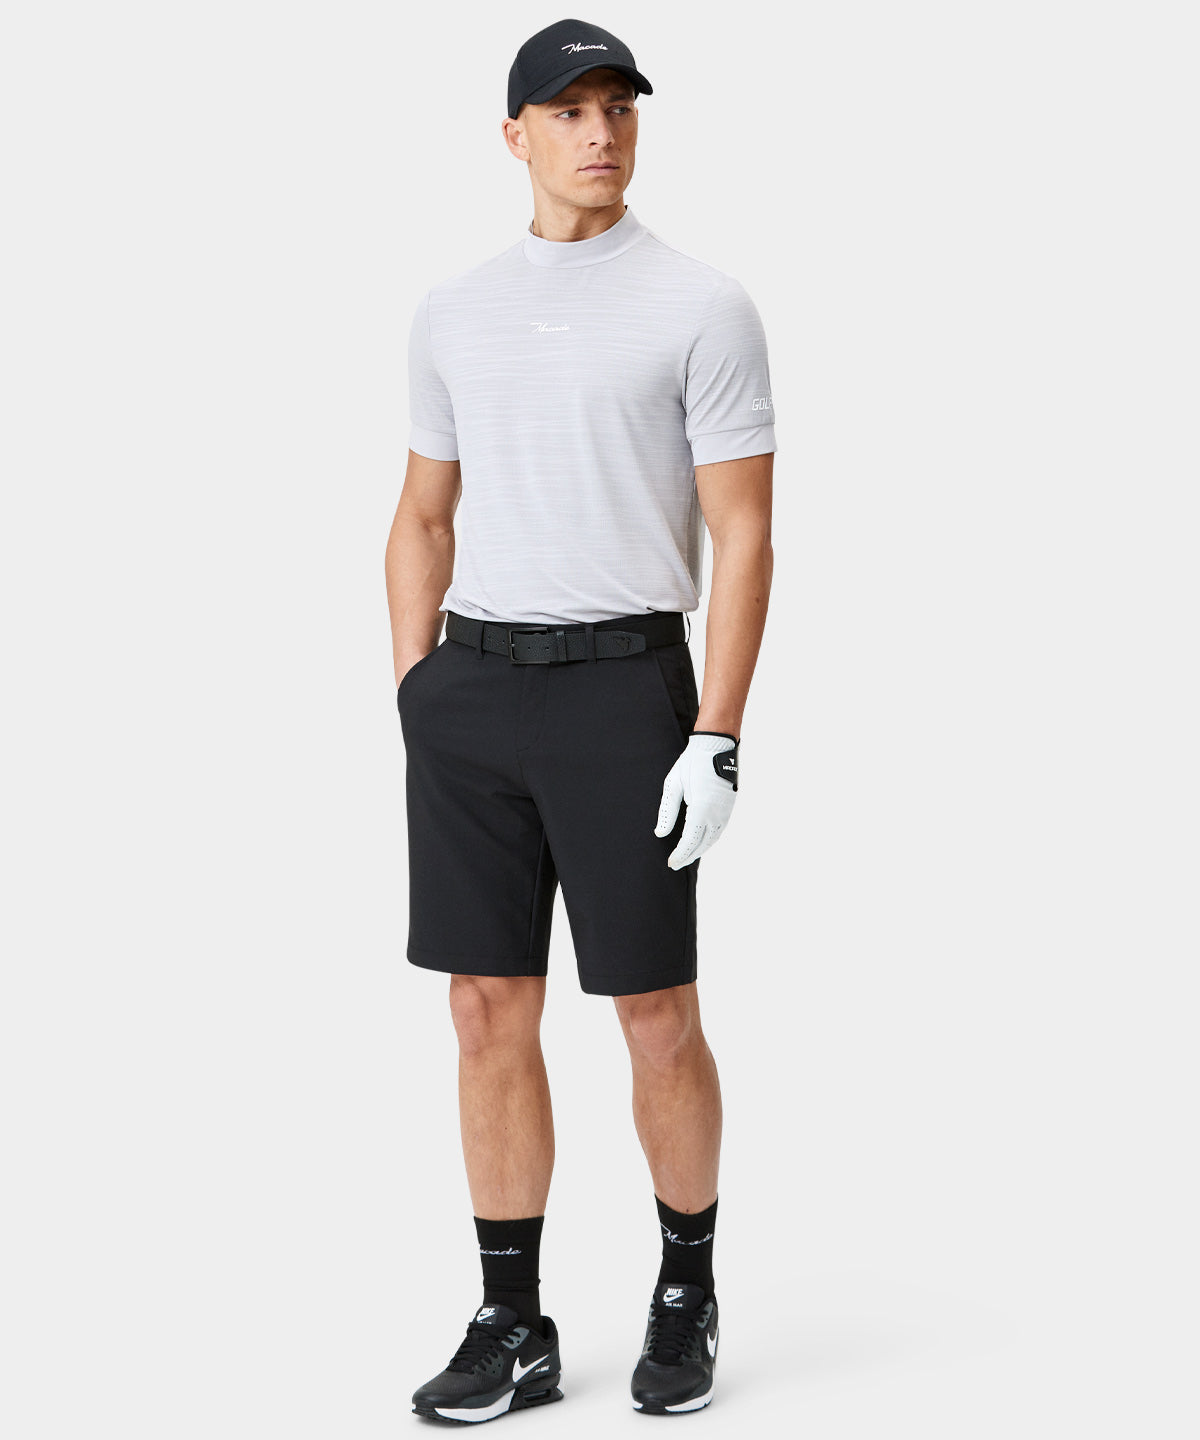 Black Four-Way Stretch Shorts Macade Golf